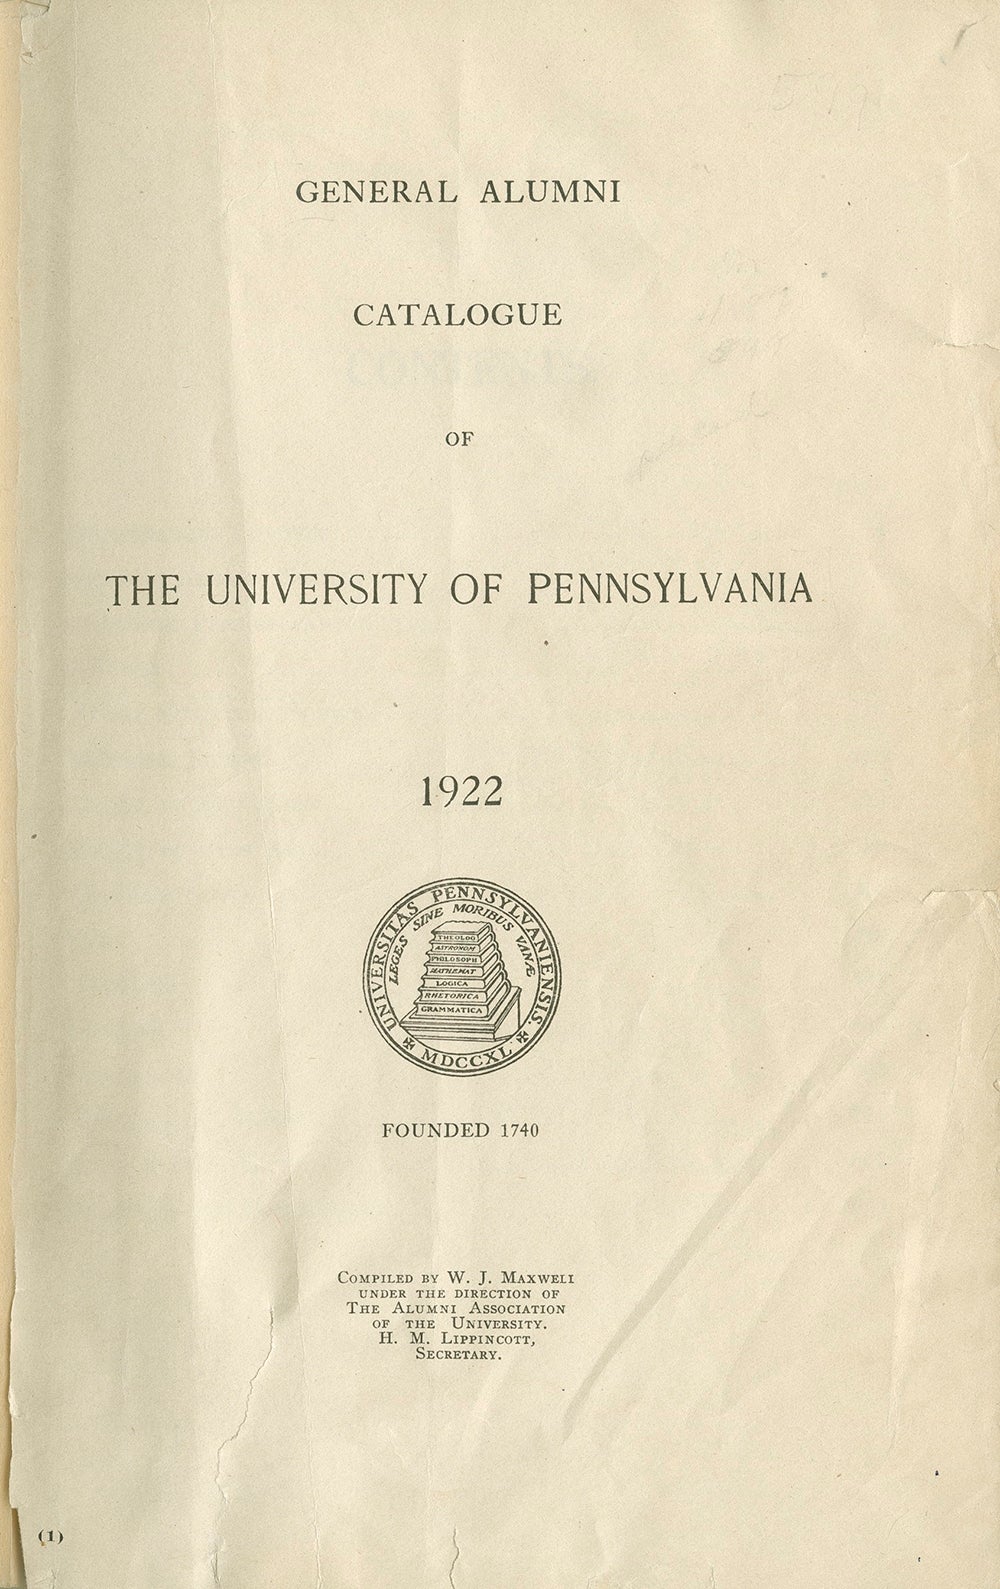 General Alumni Catalogue of the University of Pennsylvania (1922), cover